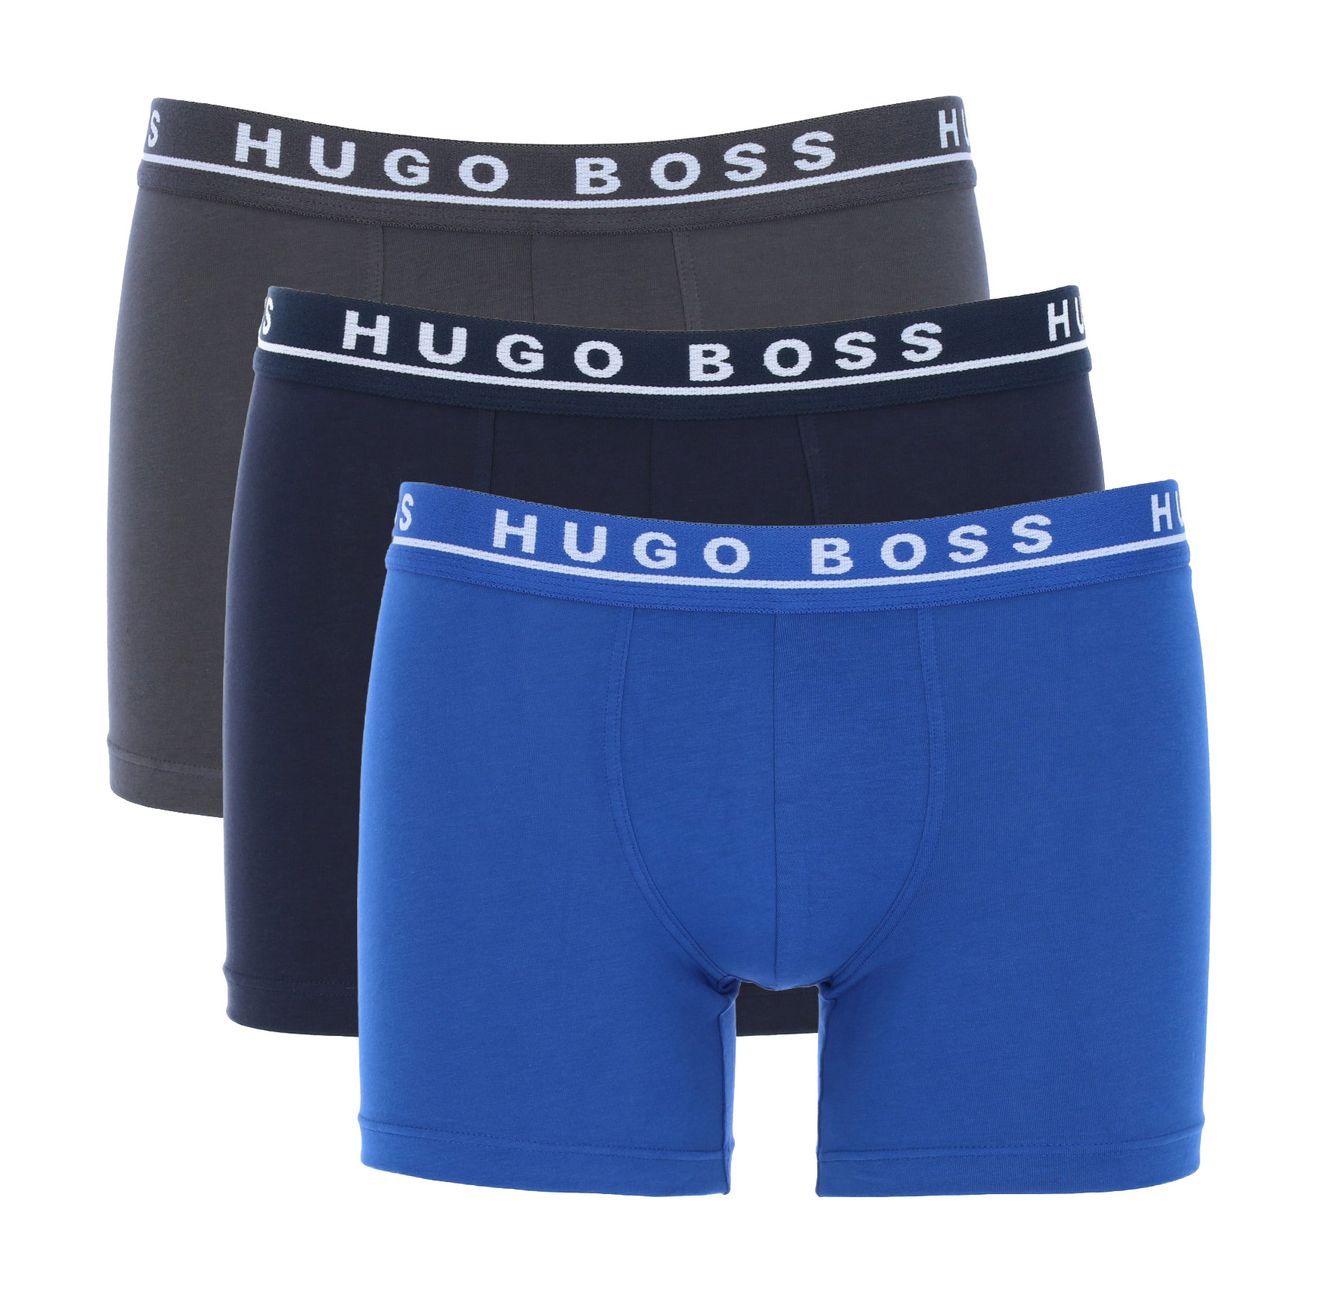 Hugo Boss Herren Boxershorts 3er Pack Boxer Brief - Hugo Boss - SAGATOO - 4021419124435